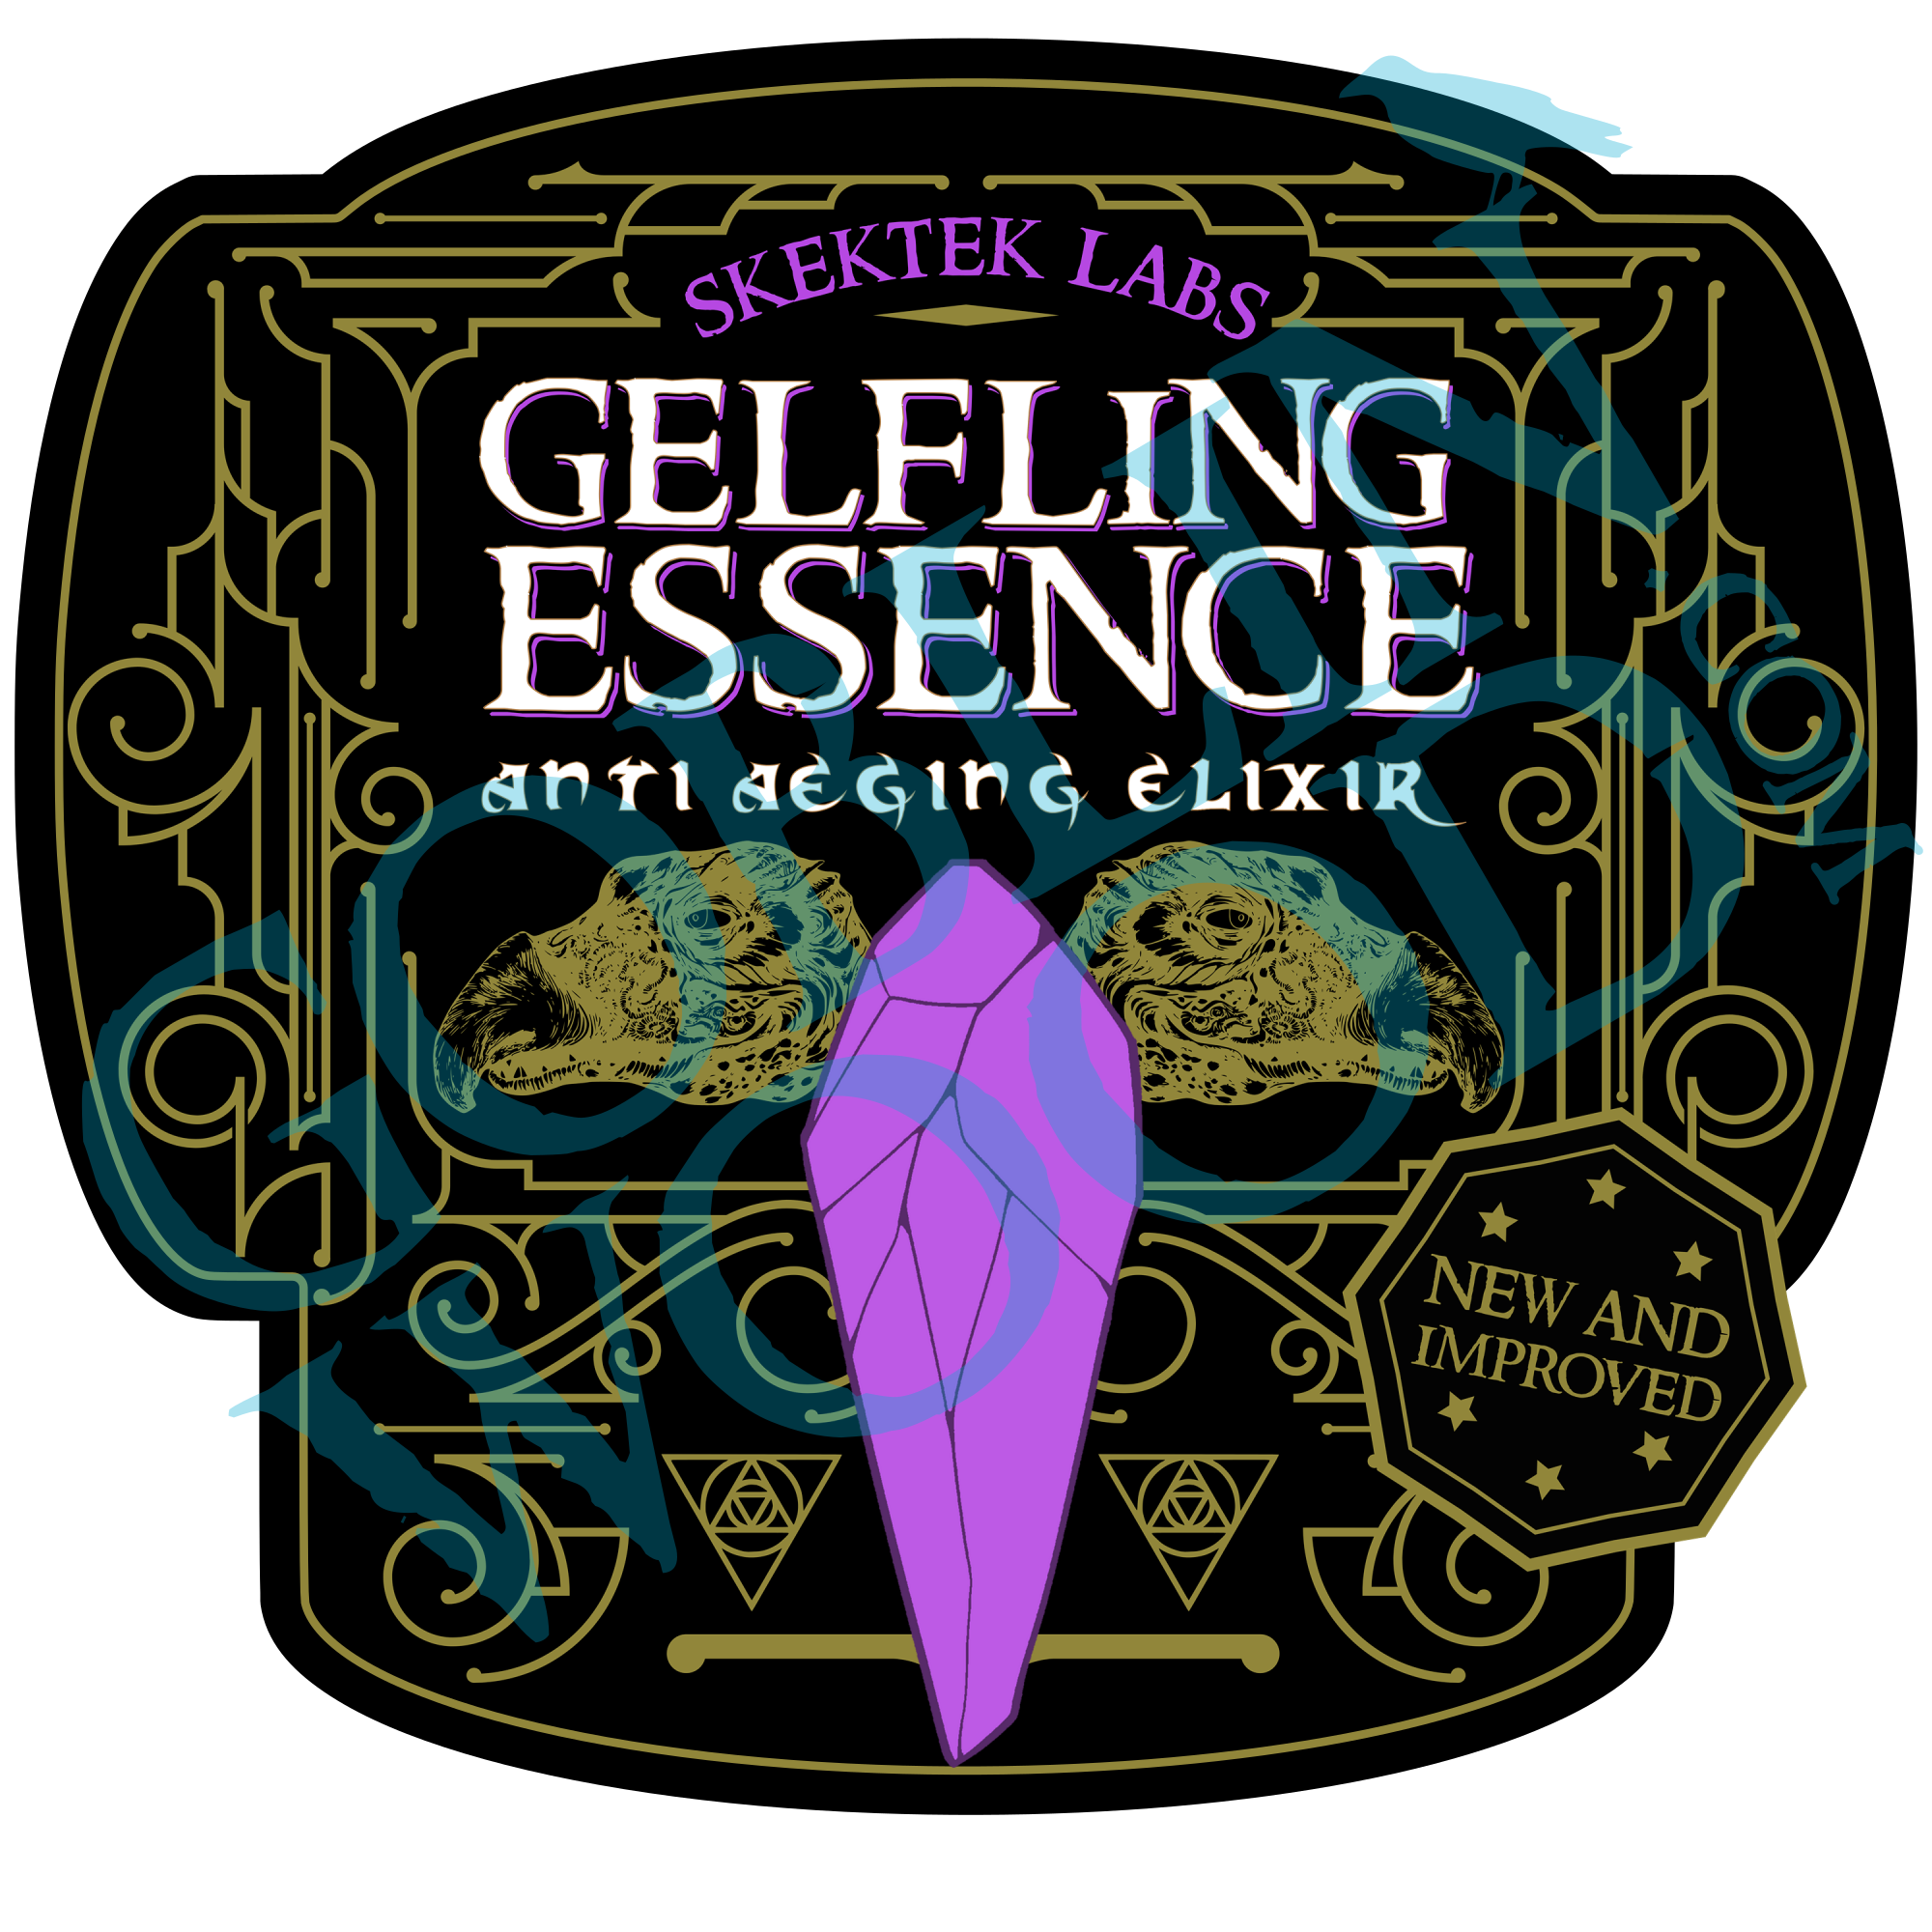 Gelfling Essence Potion - The Dark Crystal Inspired